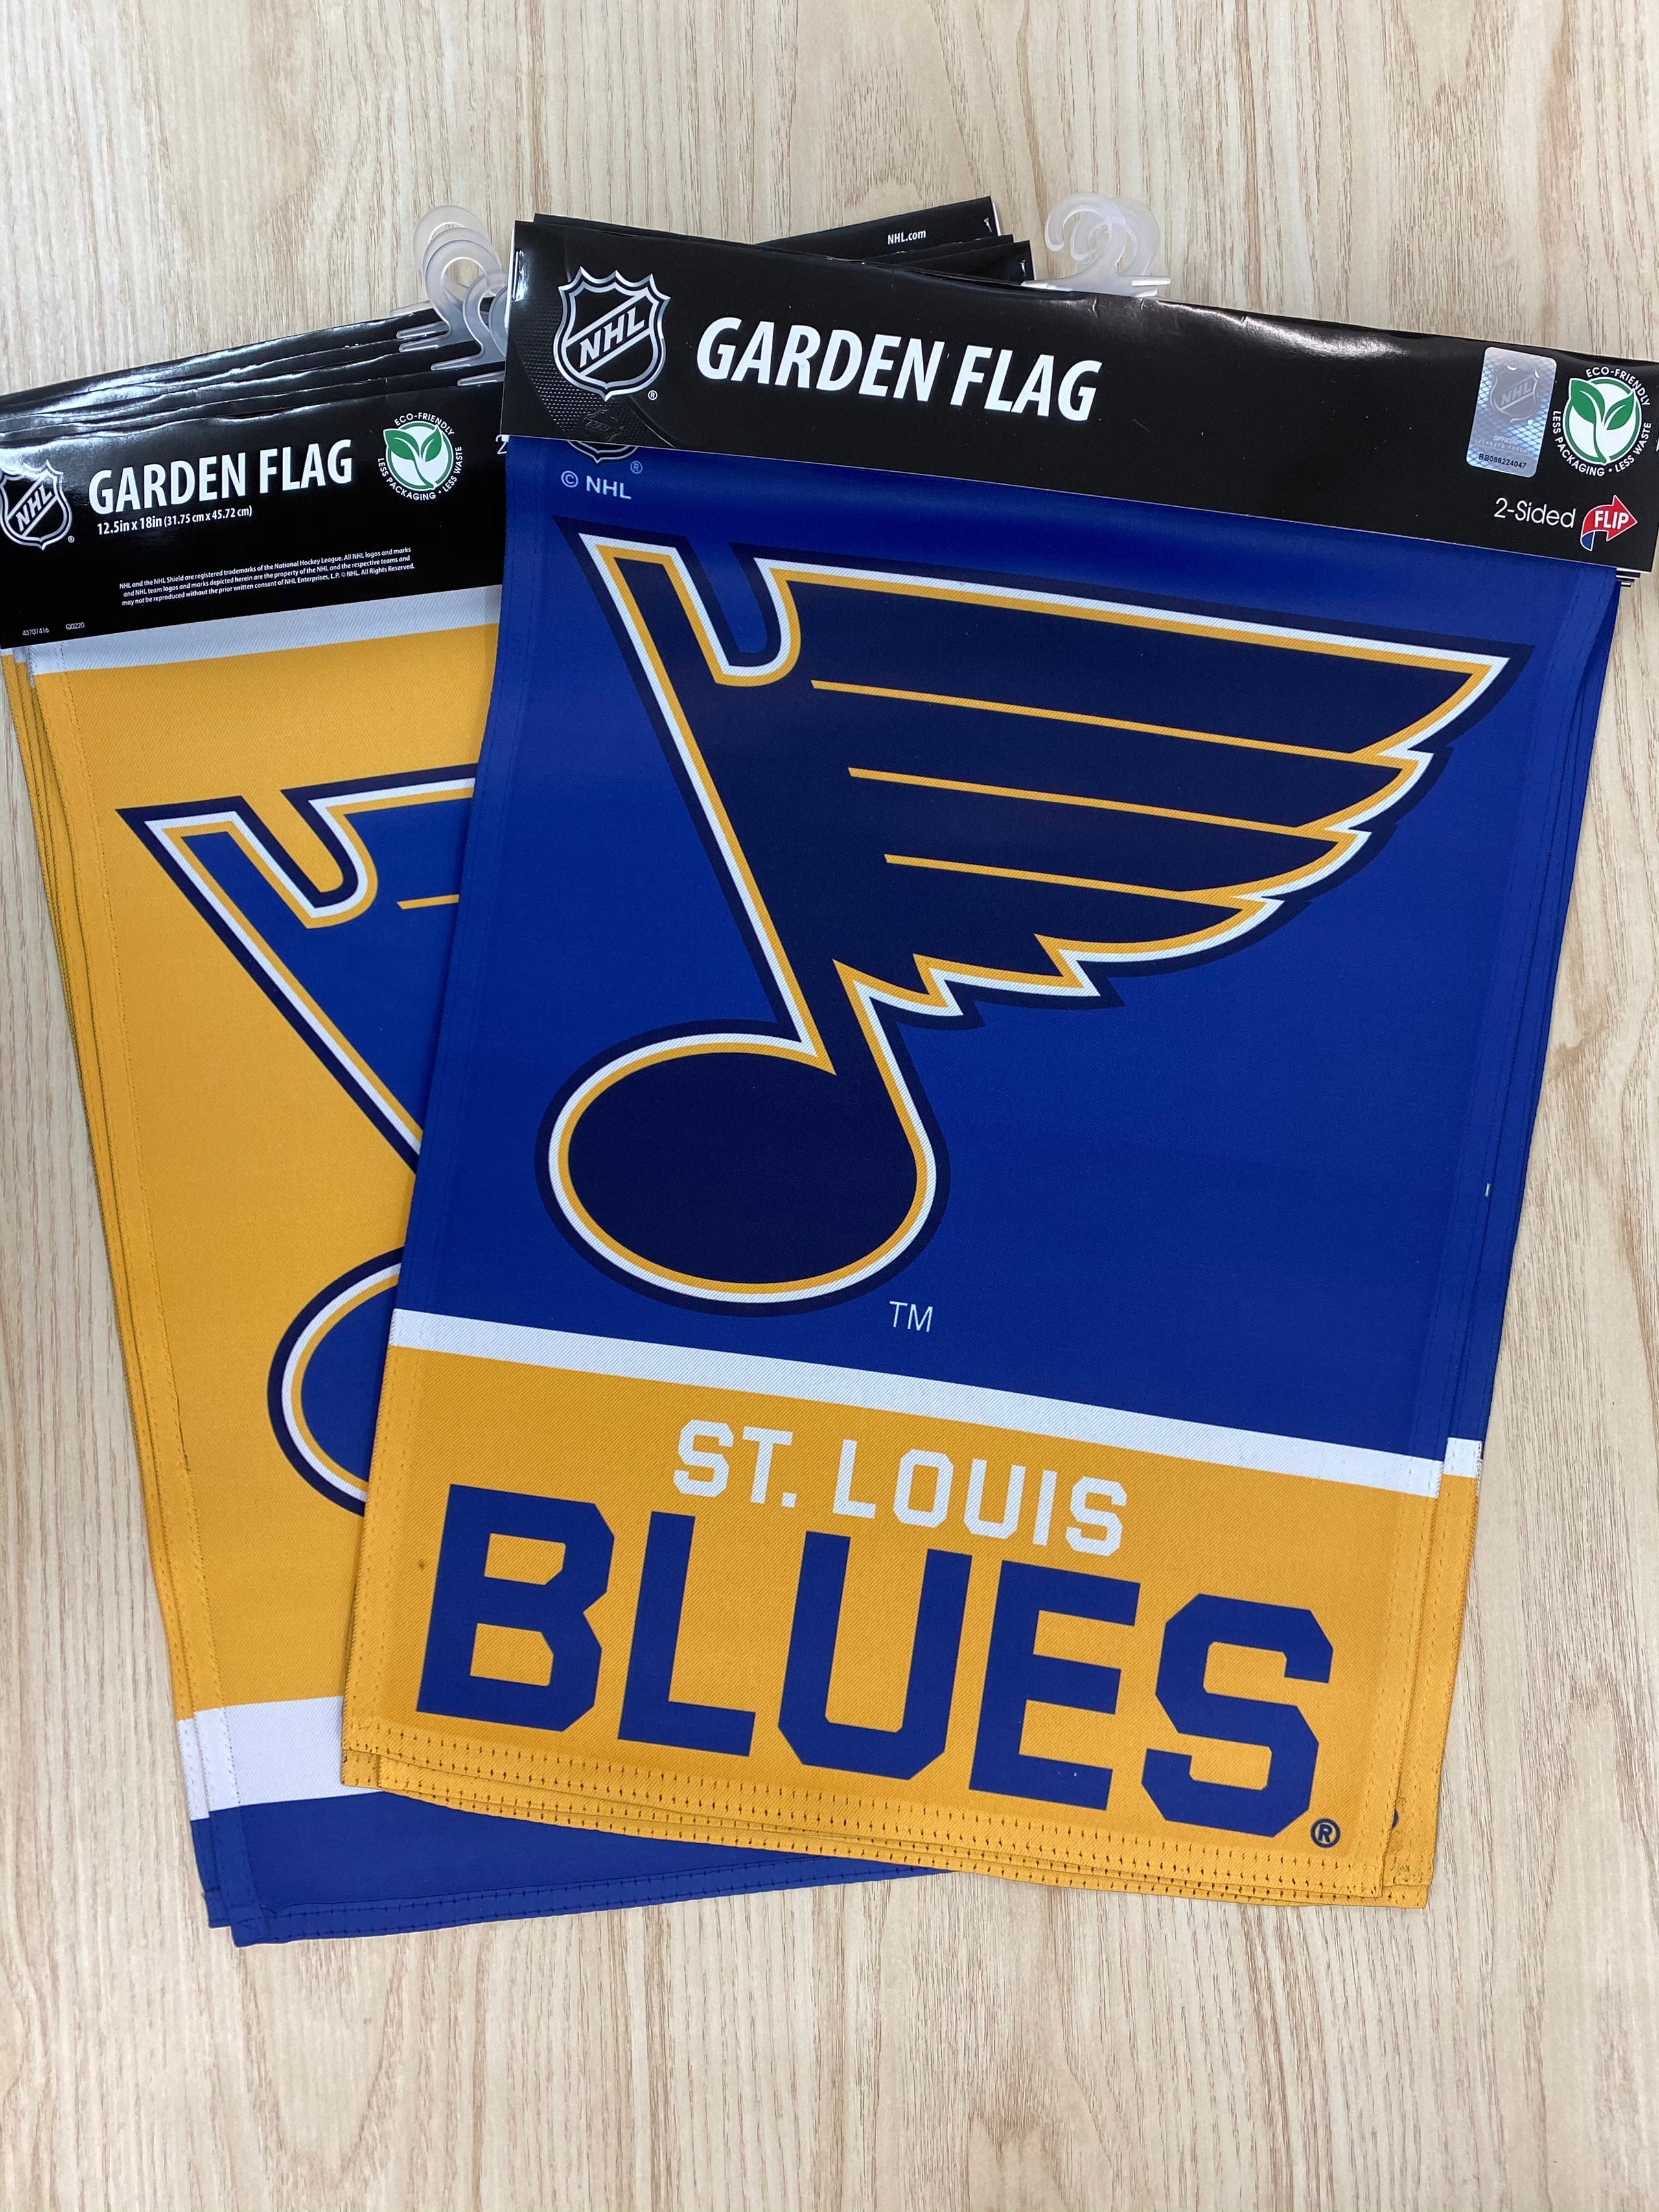 St Louis Blues Fan Rules Garden Flag - 13 x 18 Inches